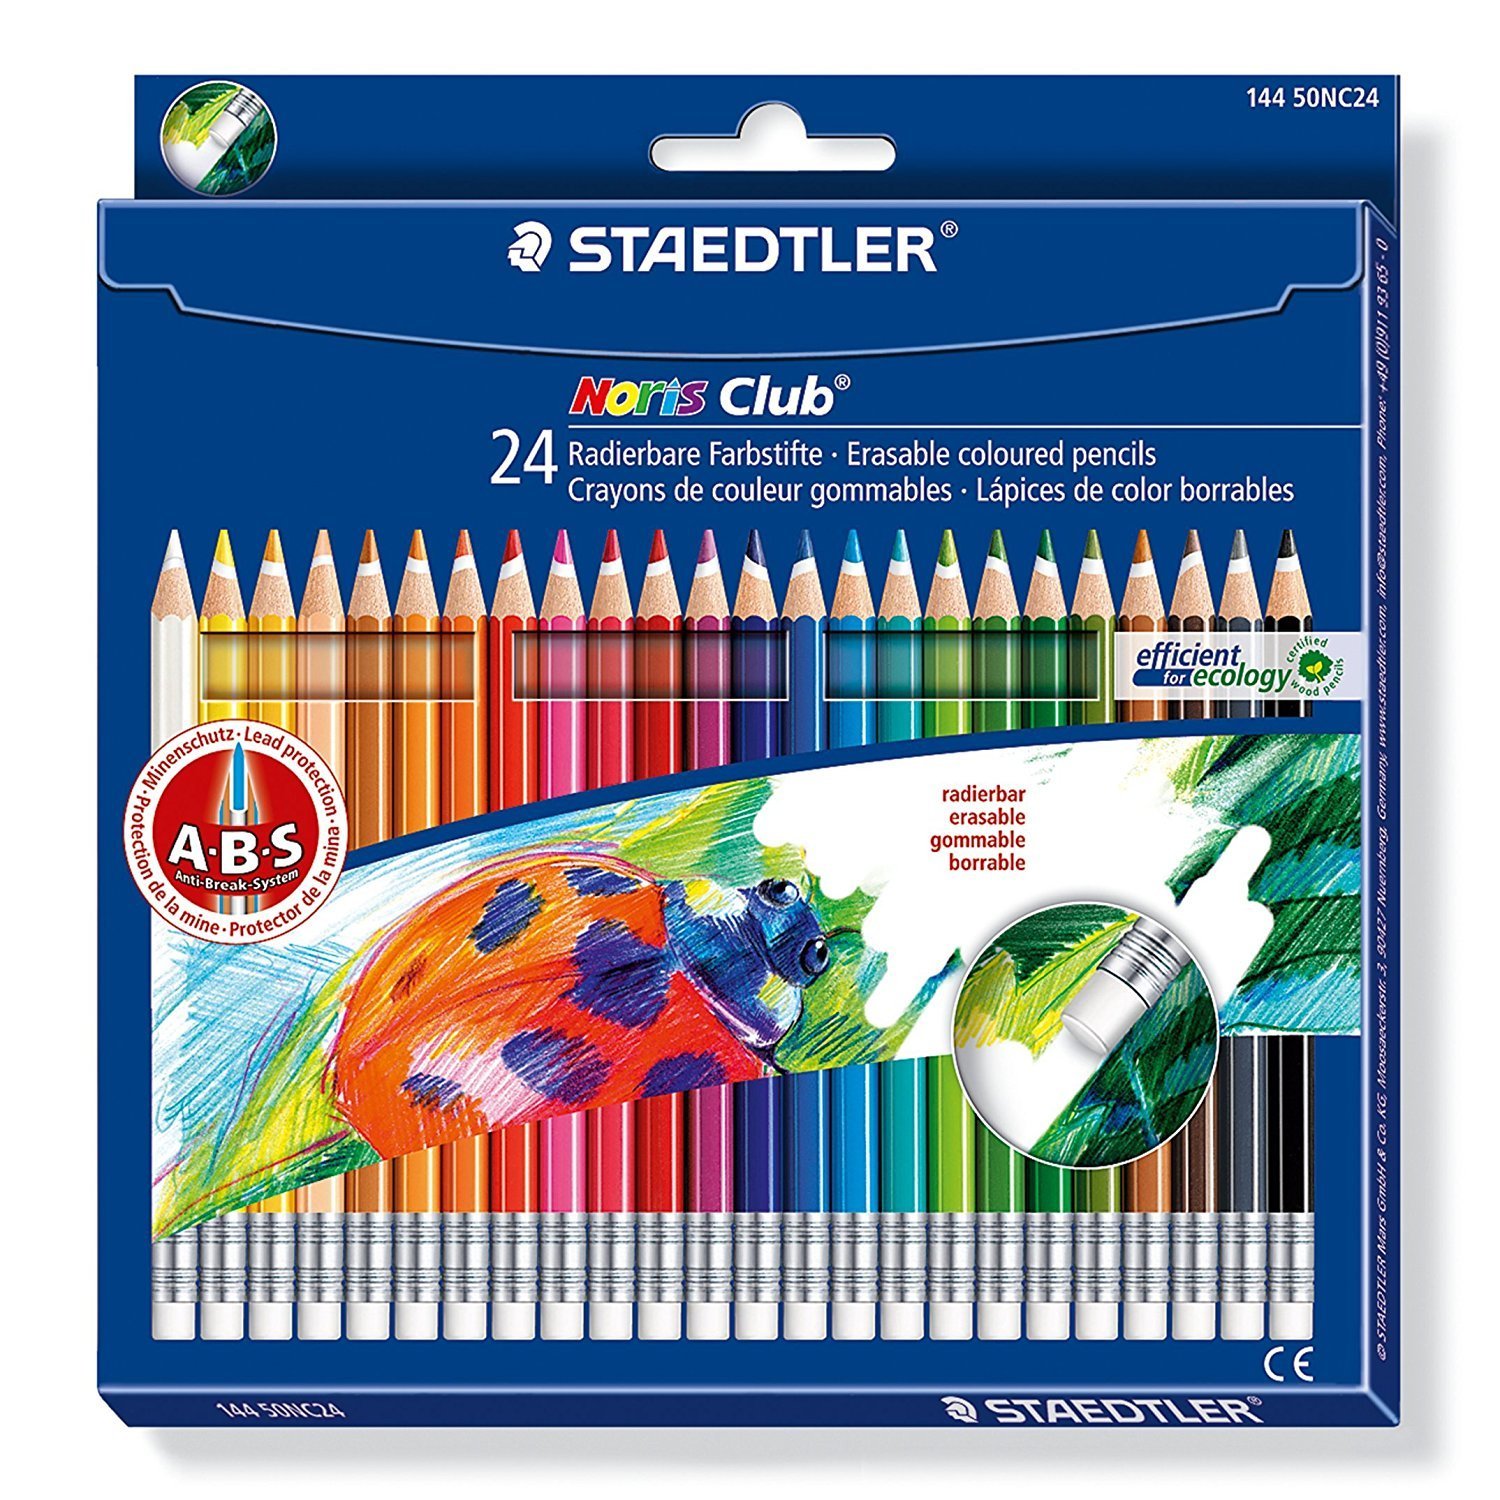 Creioane colorate, cu radiera, 24 buc/set, STAEDTLER Noris Club